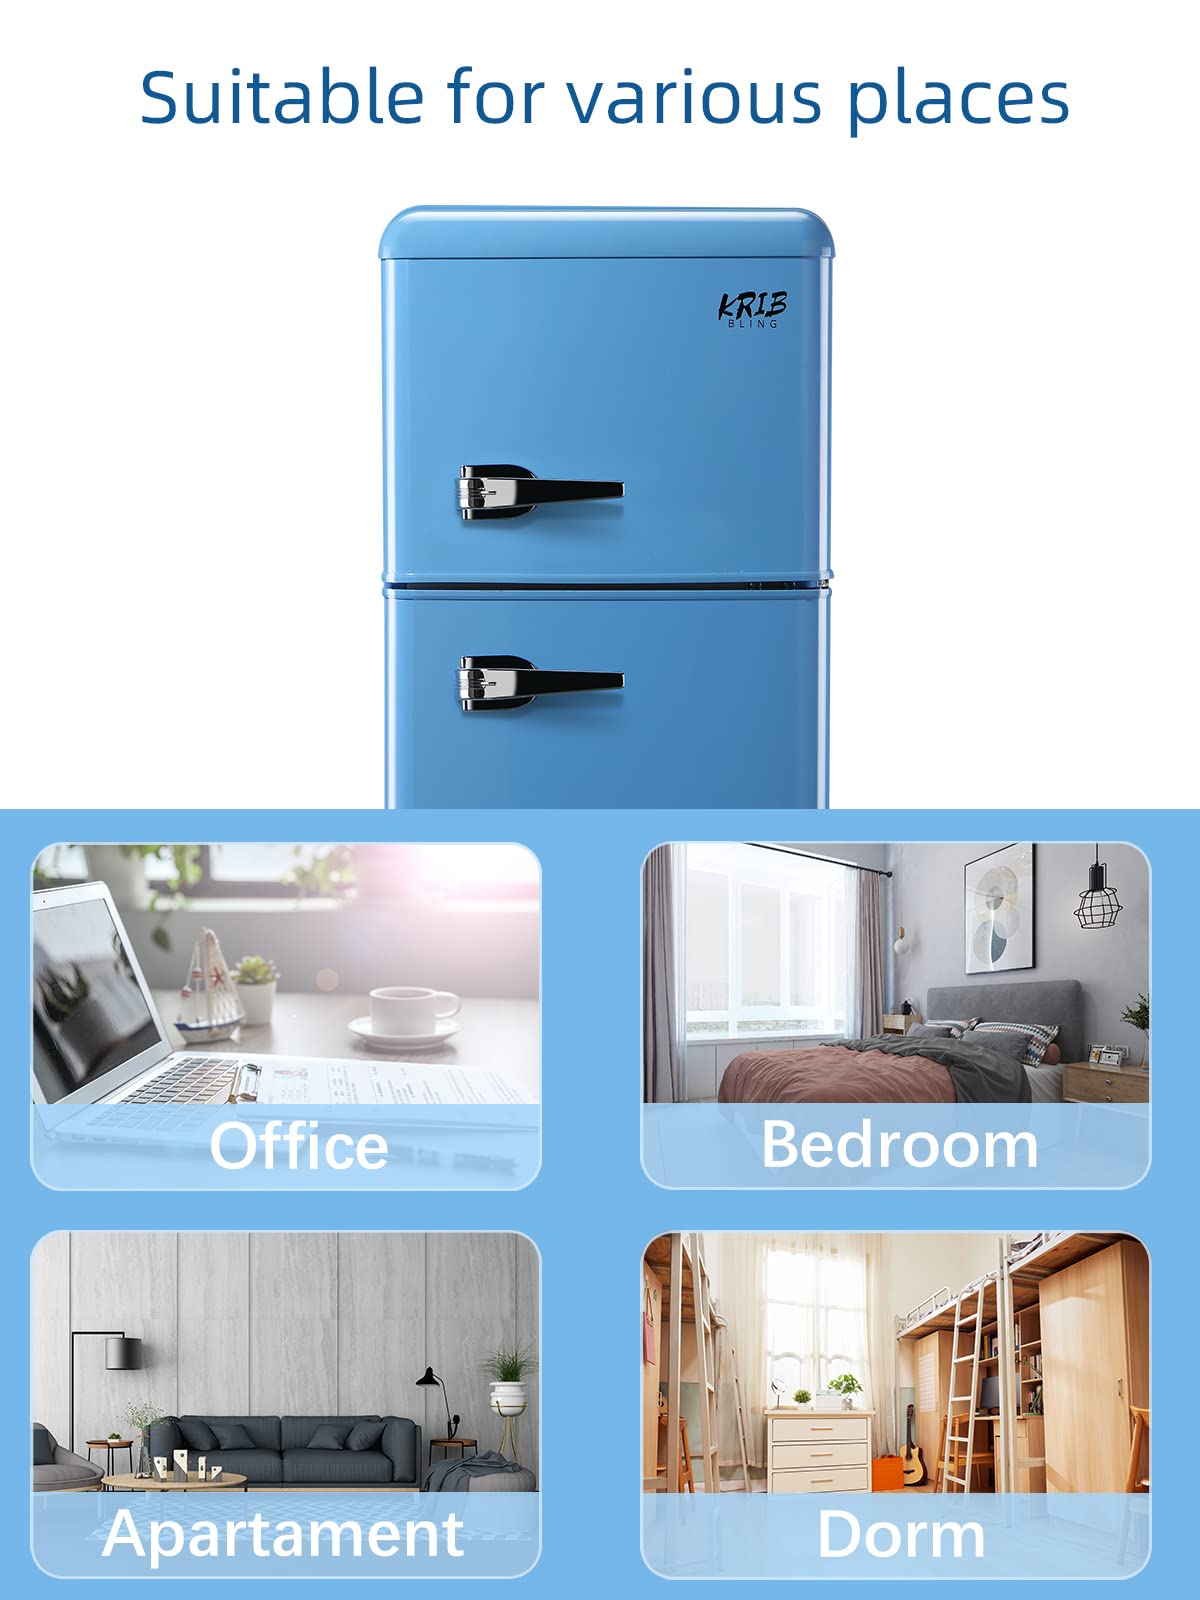 Anukis Compact Refrigerator 3.5 Cu Ft 2 Door Mini Fridge For Apartment/Dorm/Office/Family/Basement/Garage Retro Black/Blue/Red